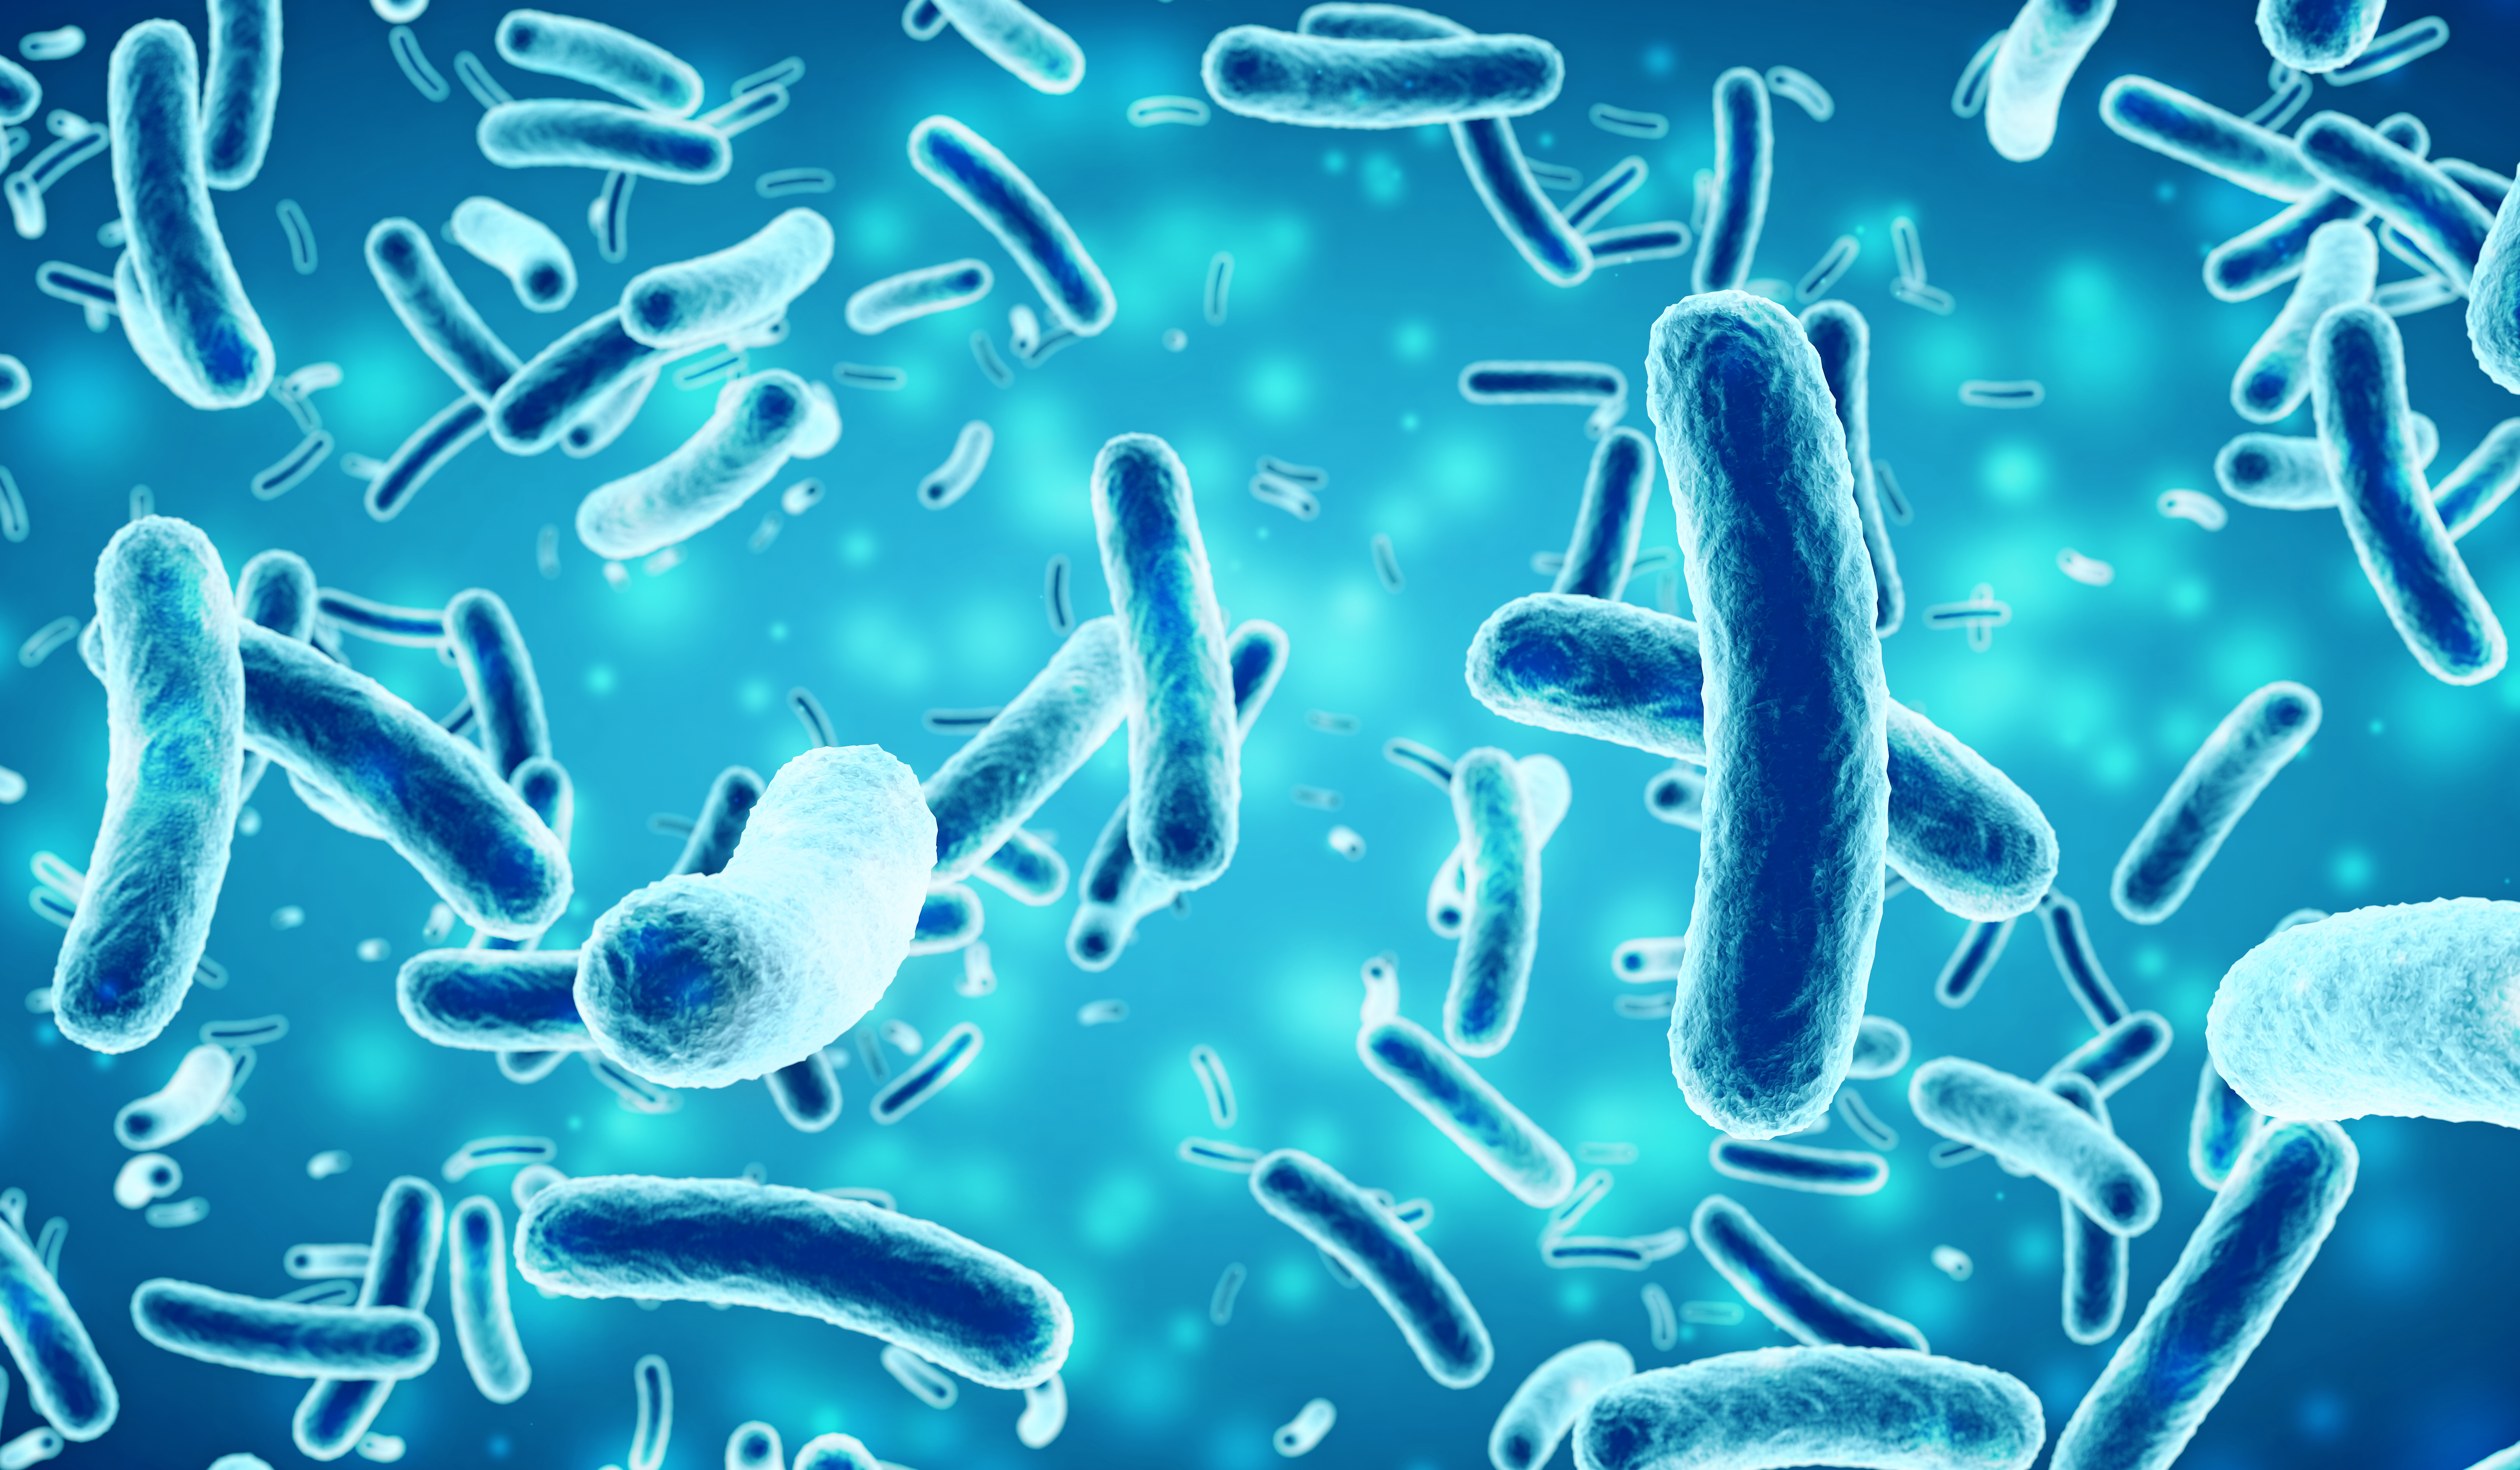 bacteria-in-a-blue-background-3d-illustration-2021-08-26-22-28-54-utc-1-.jpg